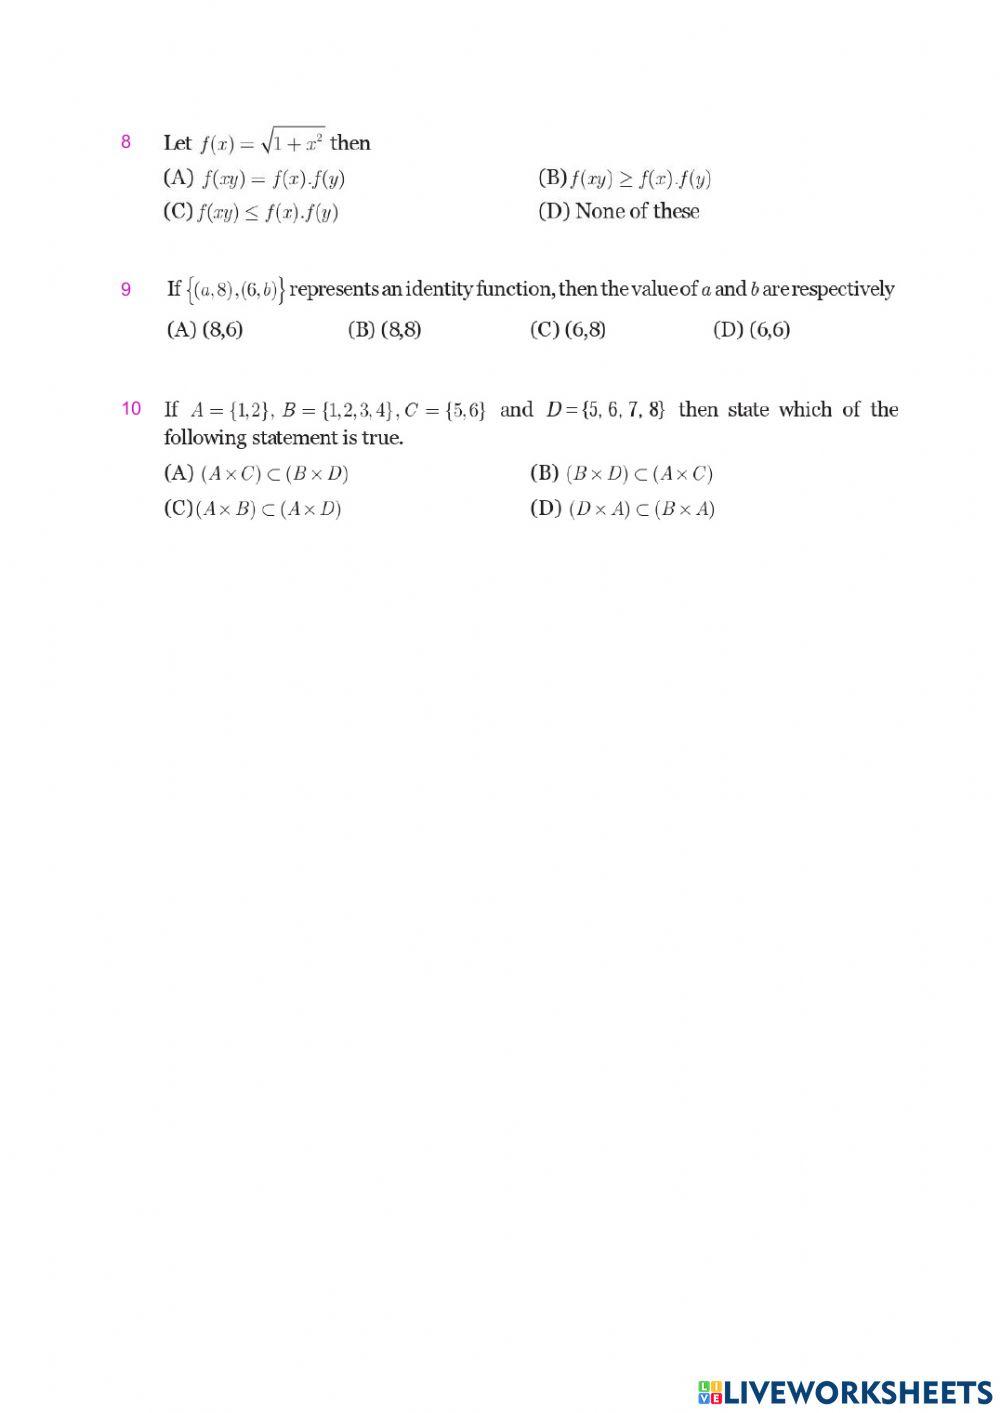 Class 10 Maths English Medium Lesson1 Test2